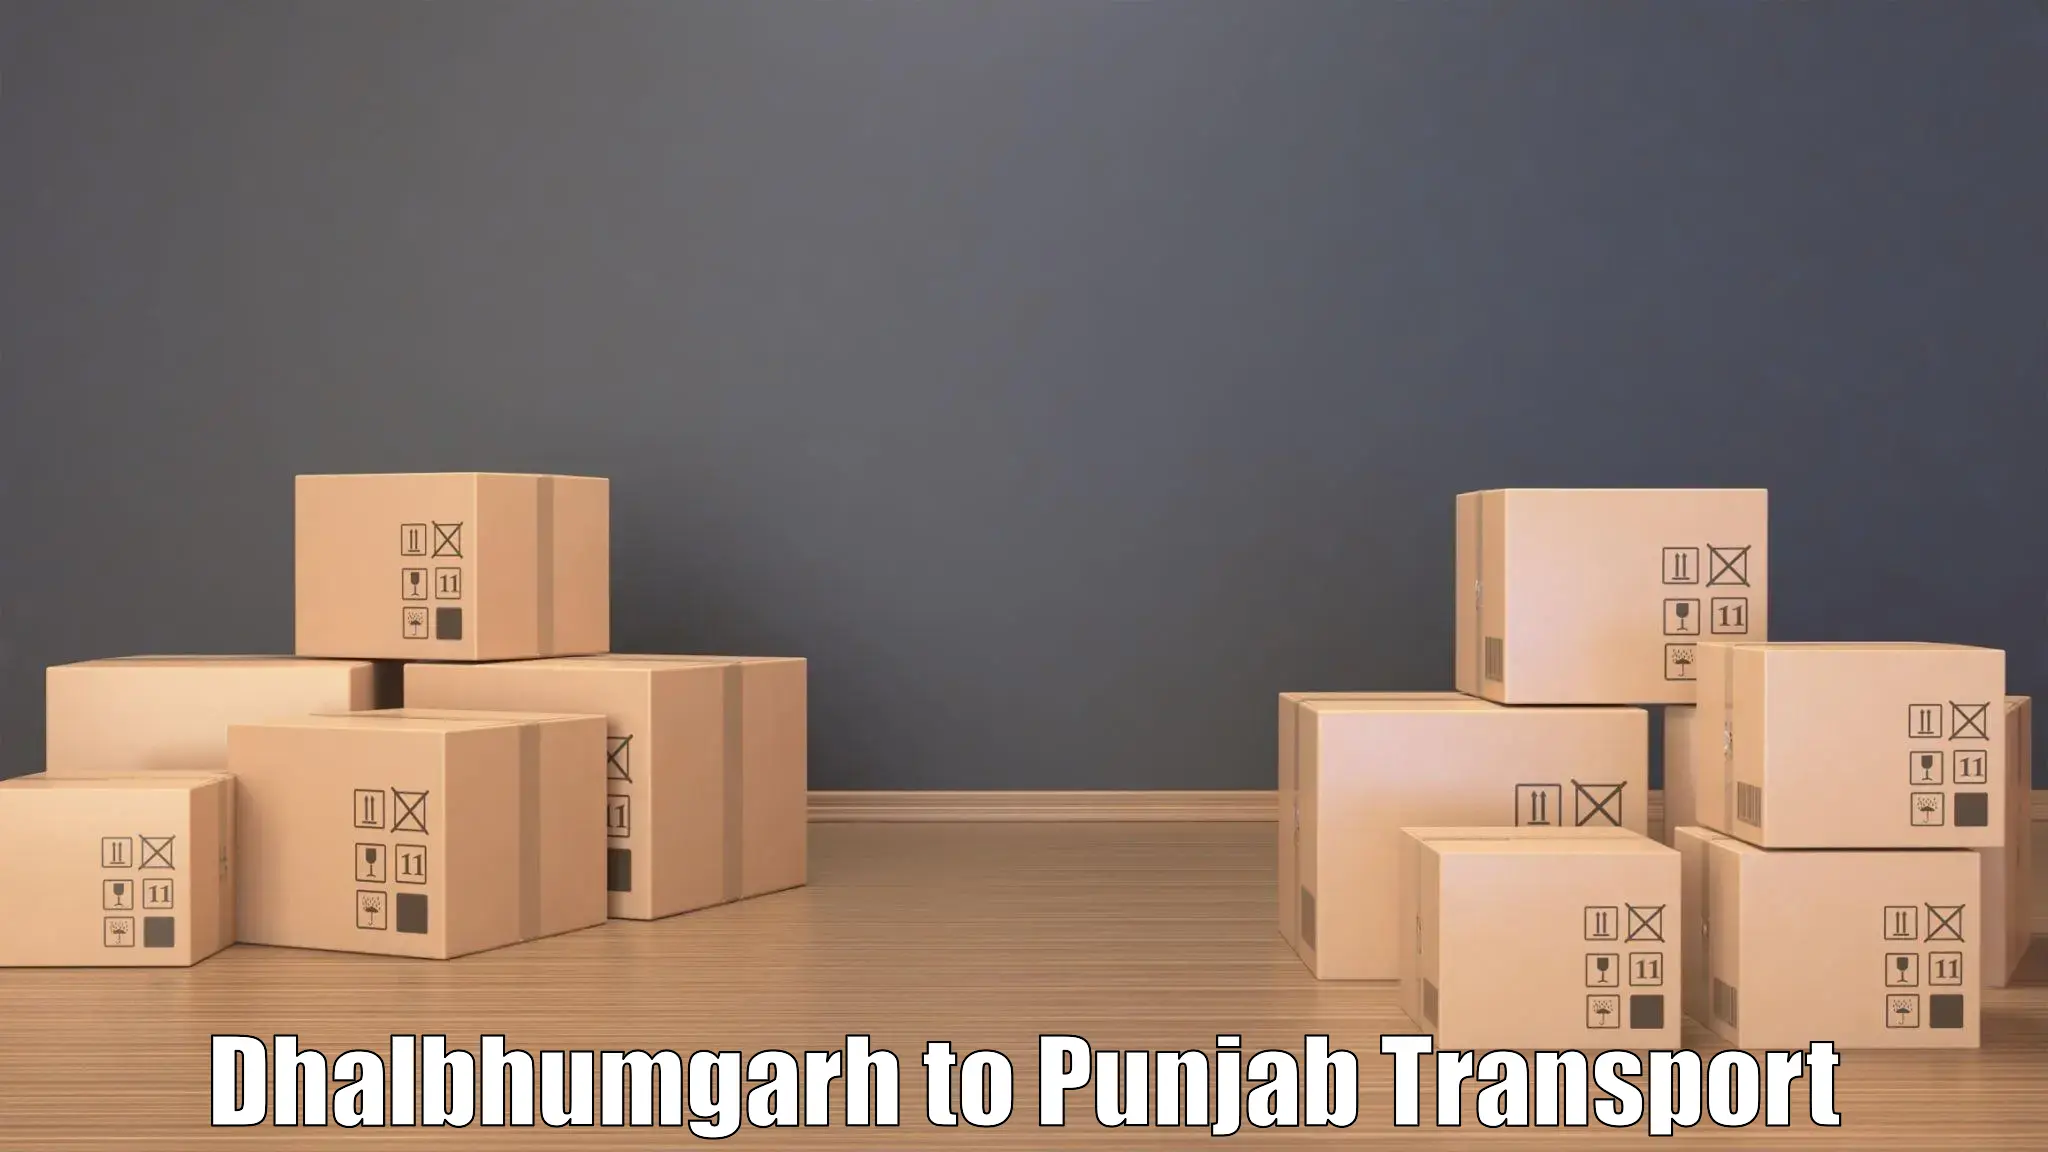 Truck transport companies in India Dhalbhumgarh to Batala